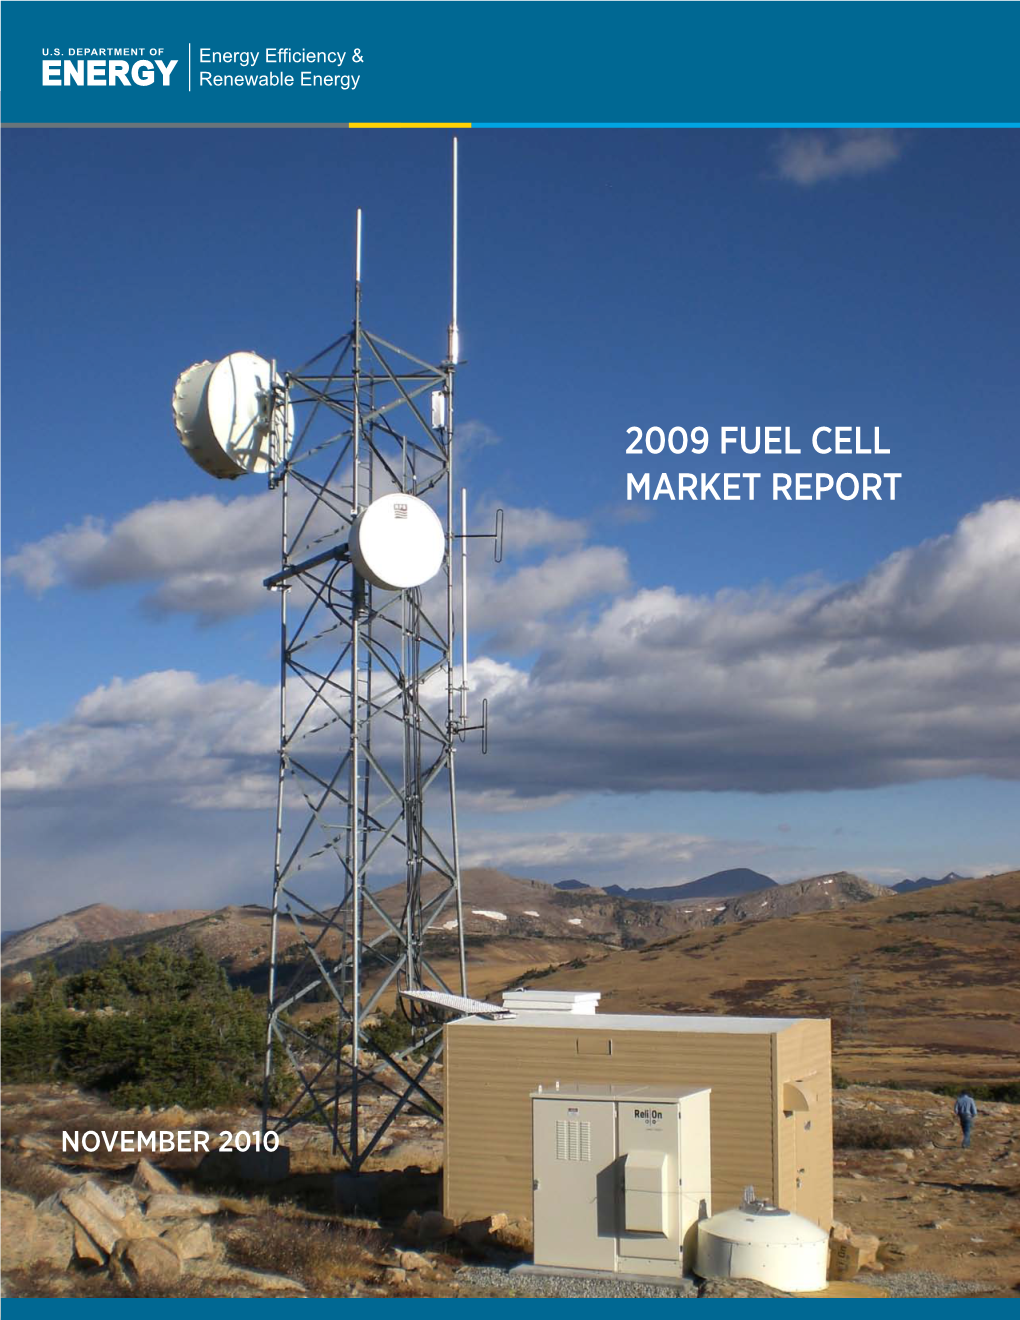 2009 Fuel Cell Market Report, November 2010, Energy Efficiency